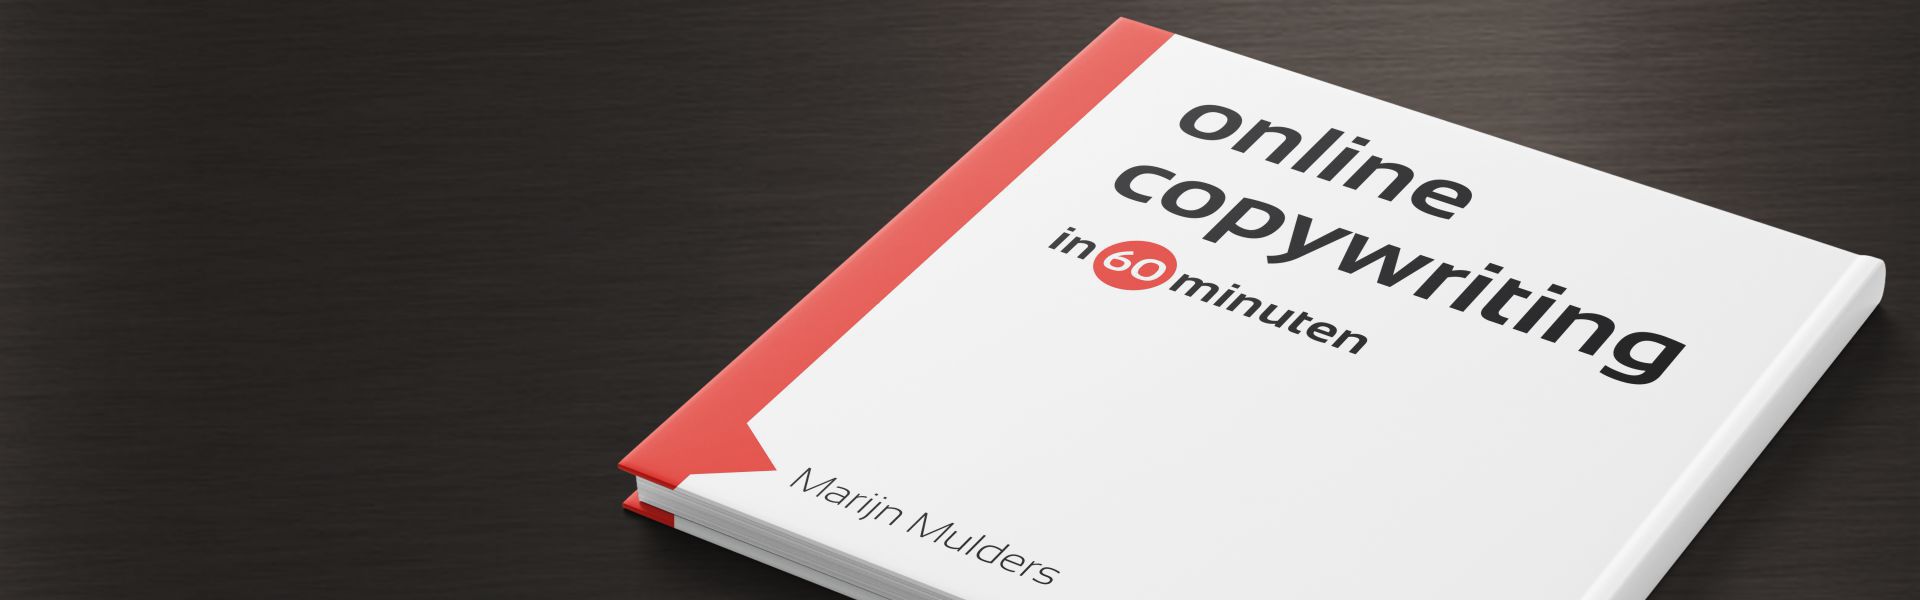 Online copywriting in 60 minuten